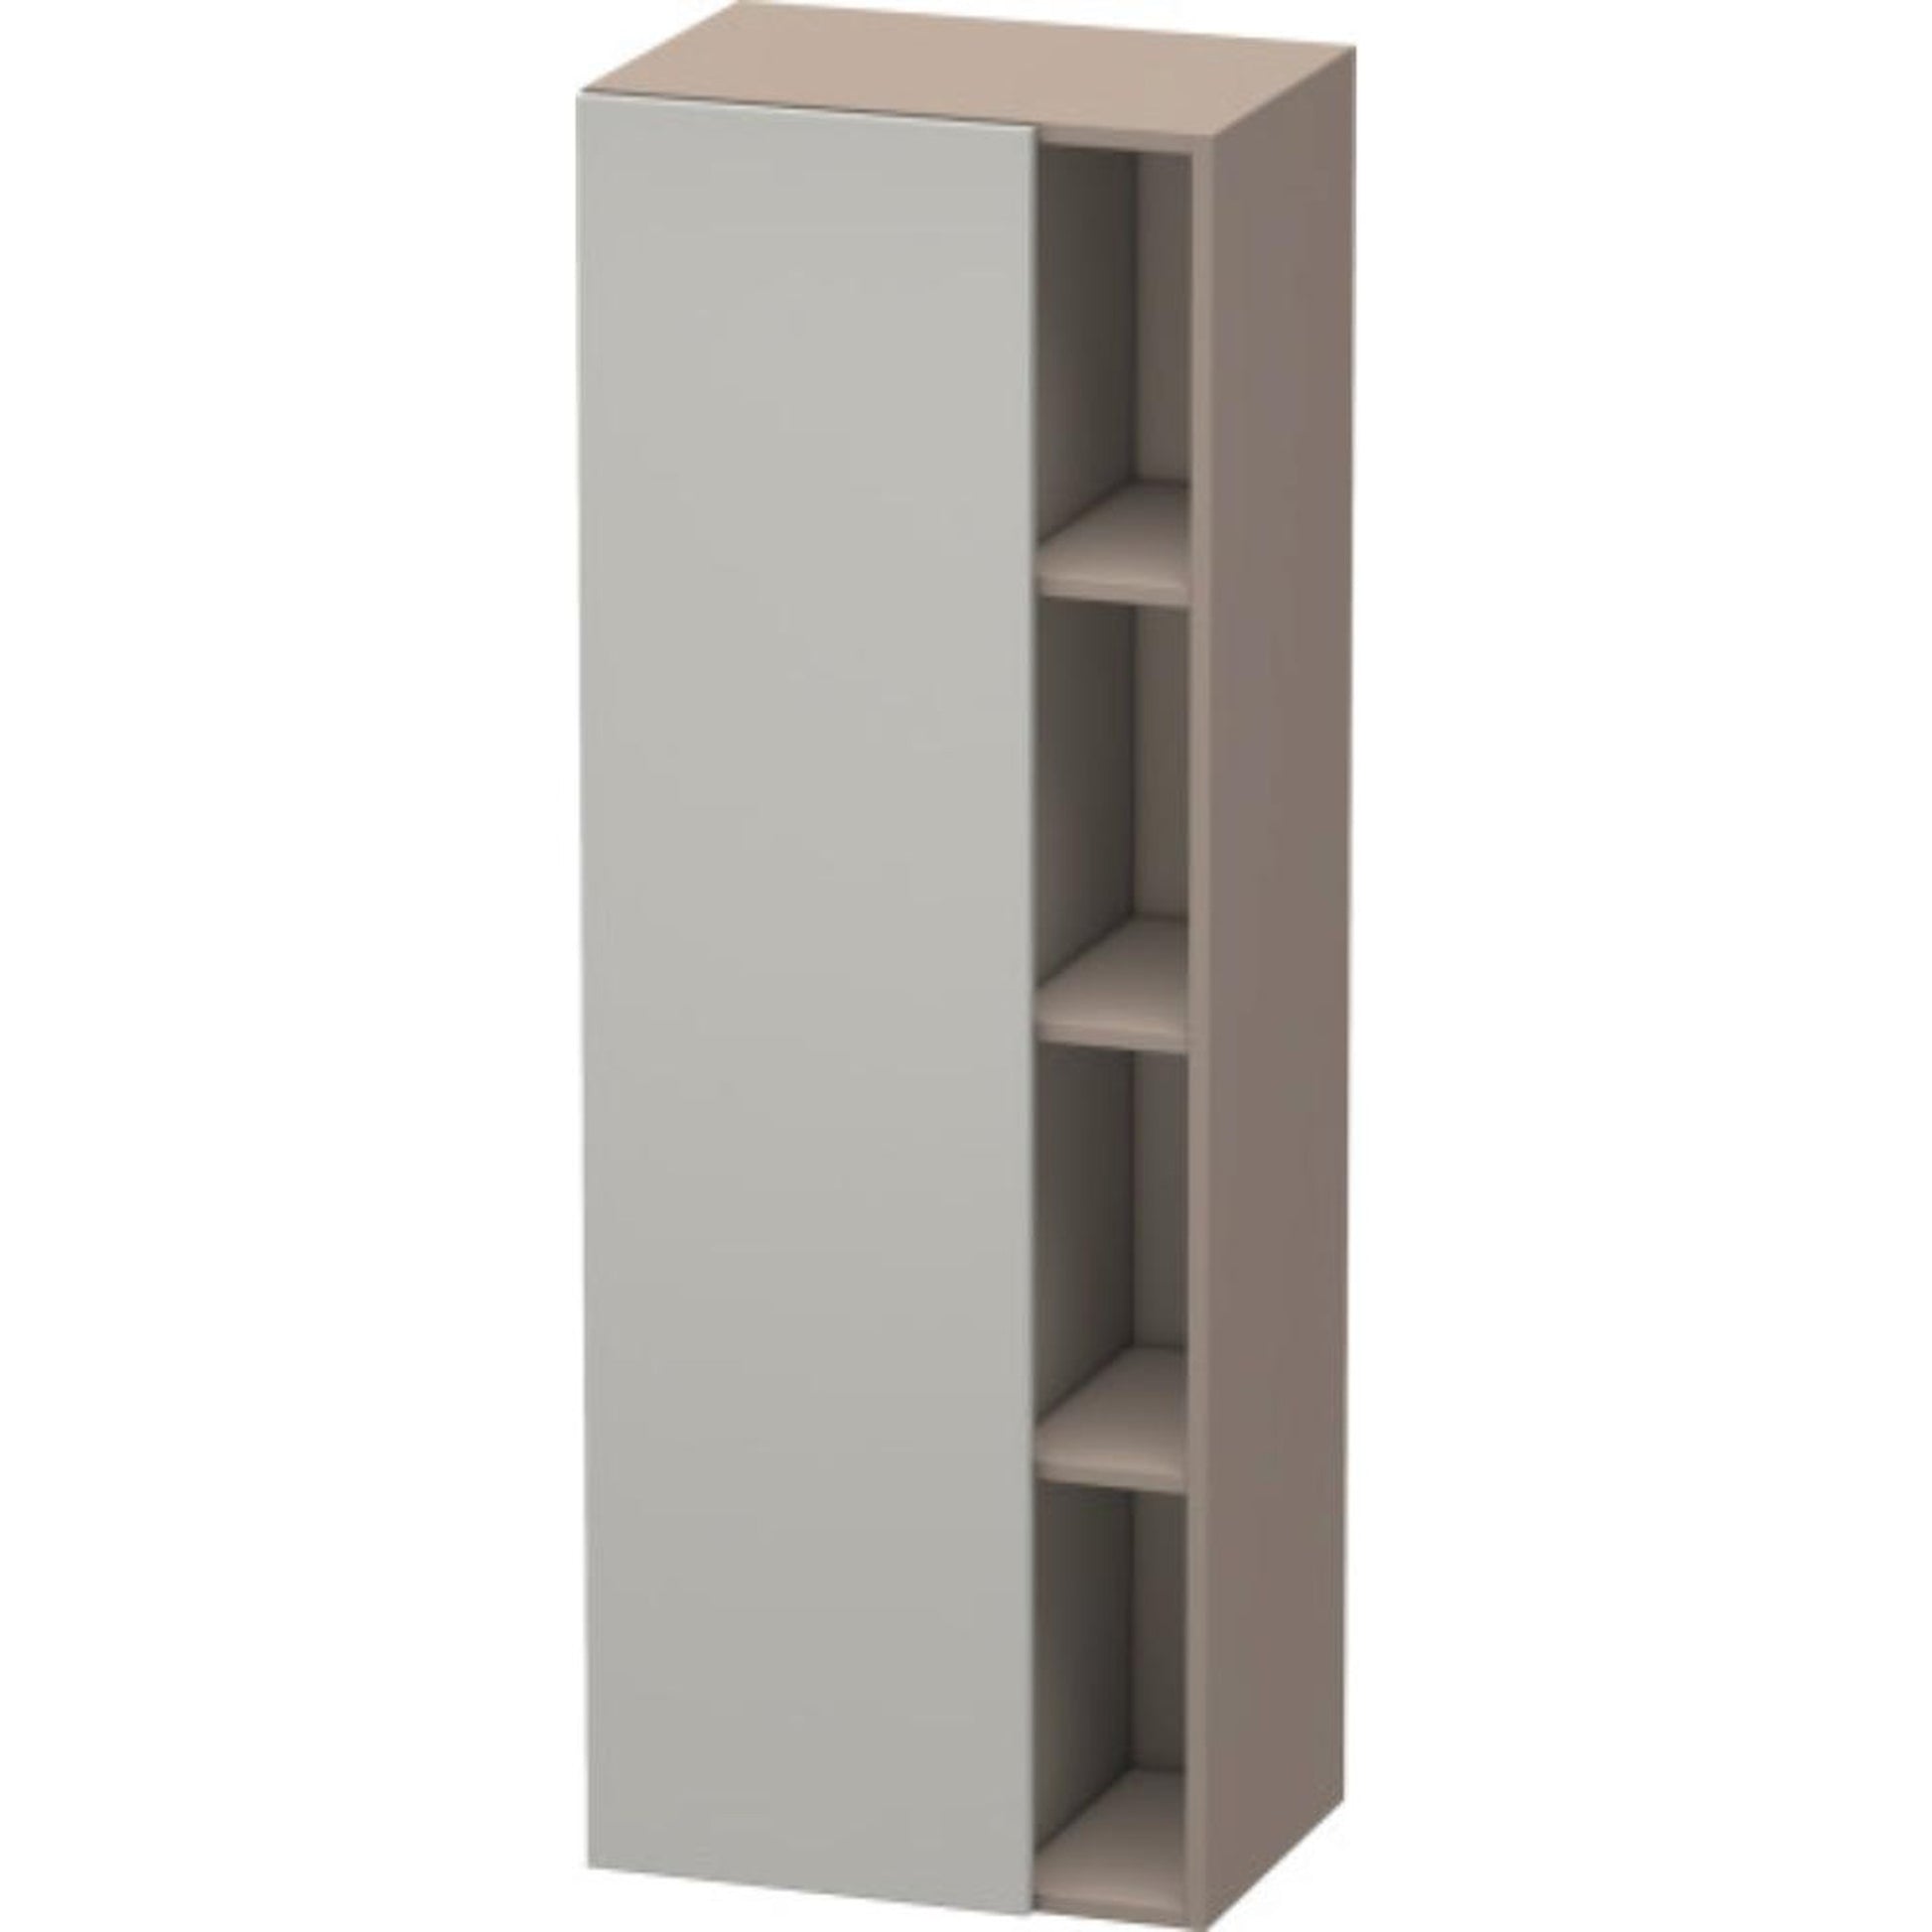 Duravit DuraStyle 20" x 55" x 14" Tall Cabinet With Left Hinge One Door in Concrete Grey Matt and Basalt (DS1239L0743)